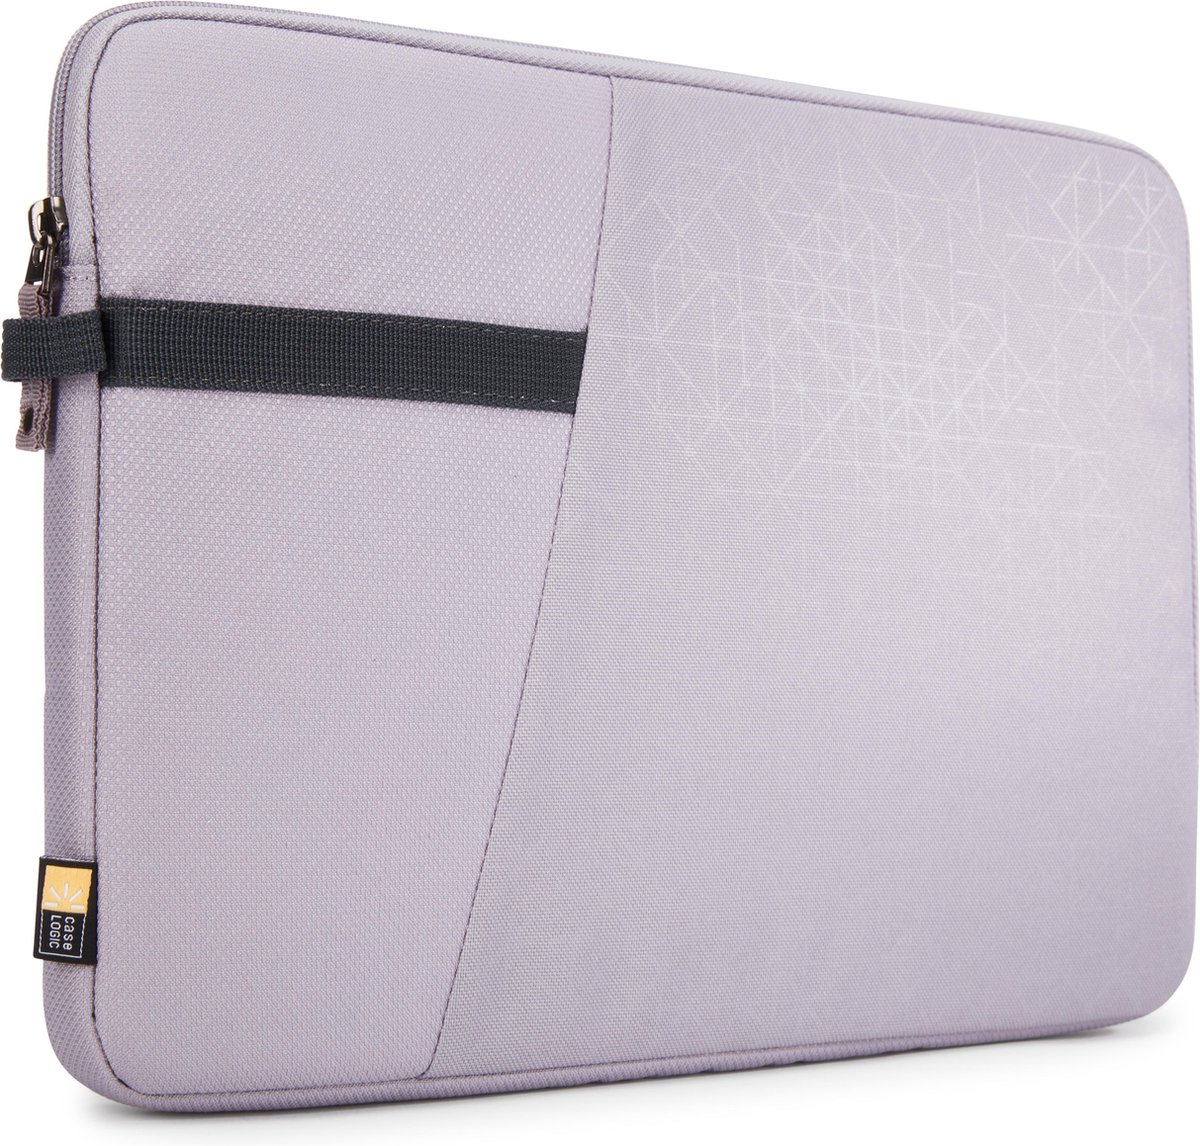 Case Logic Ibira - Laptophoes / Sleeve - 15.6 inch - Minimal Gray